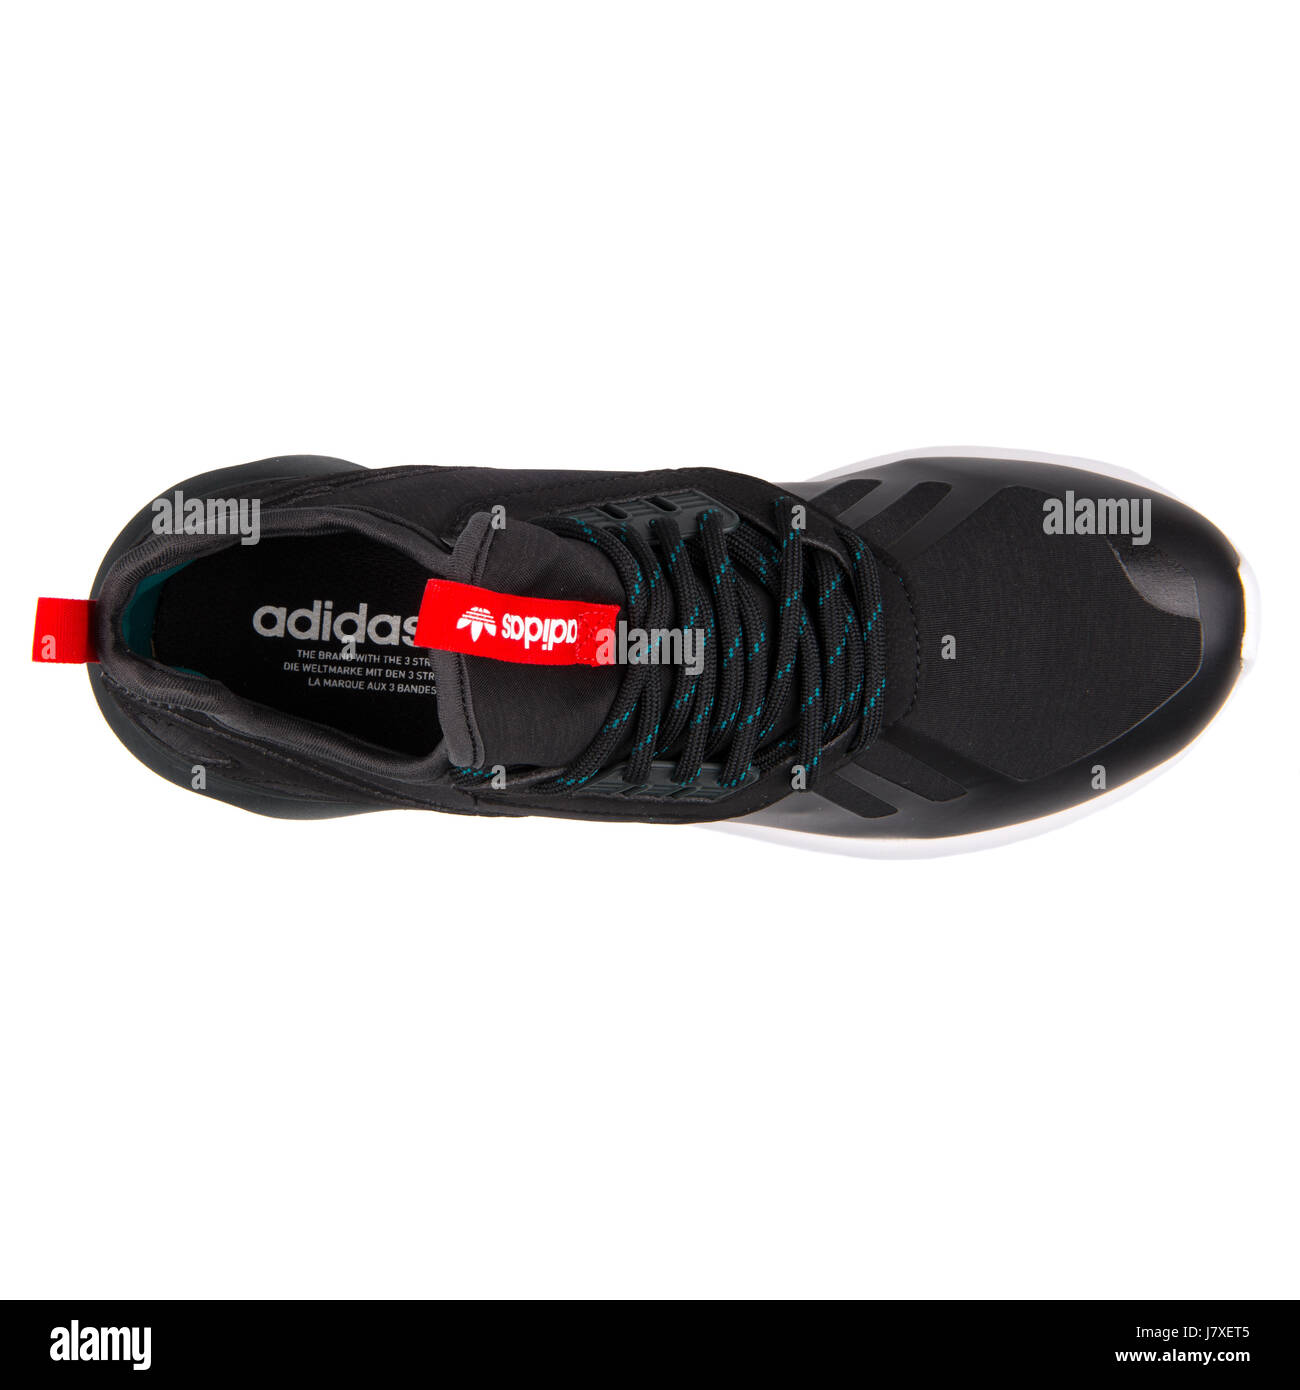 adidas tubular runner weave black